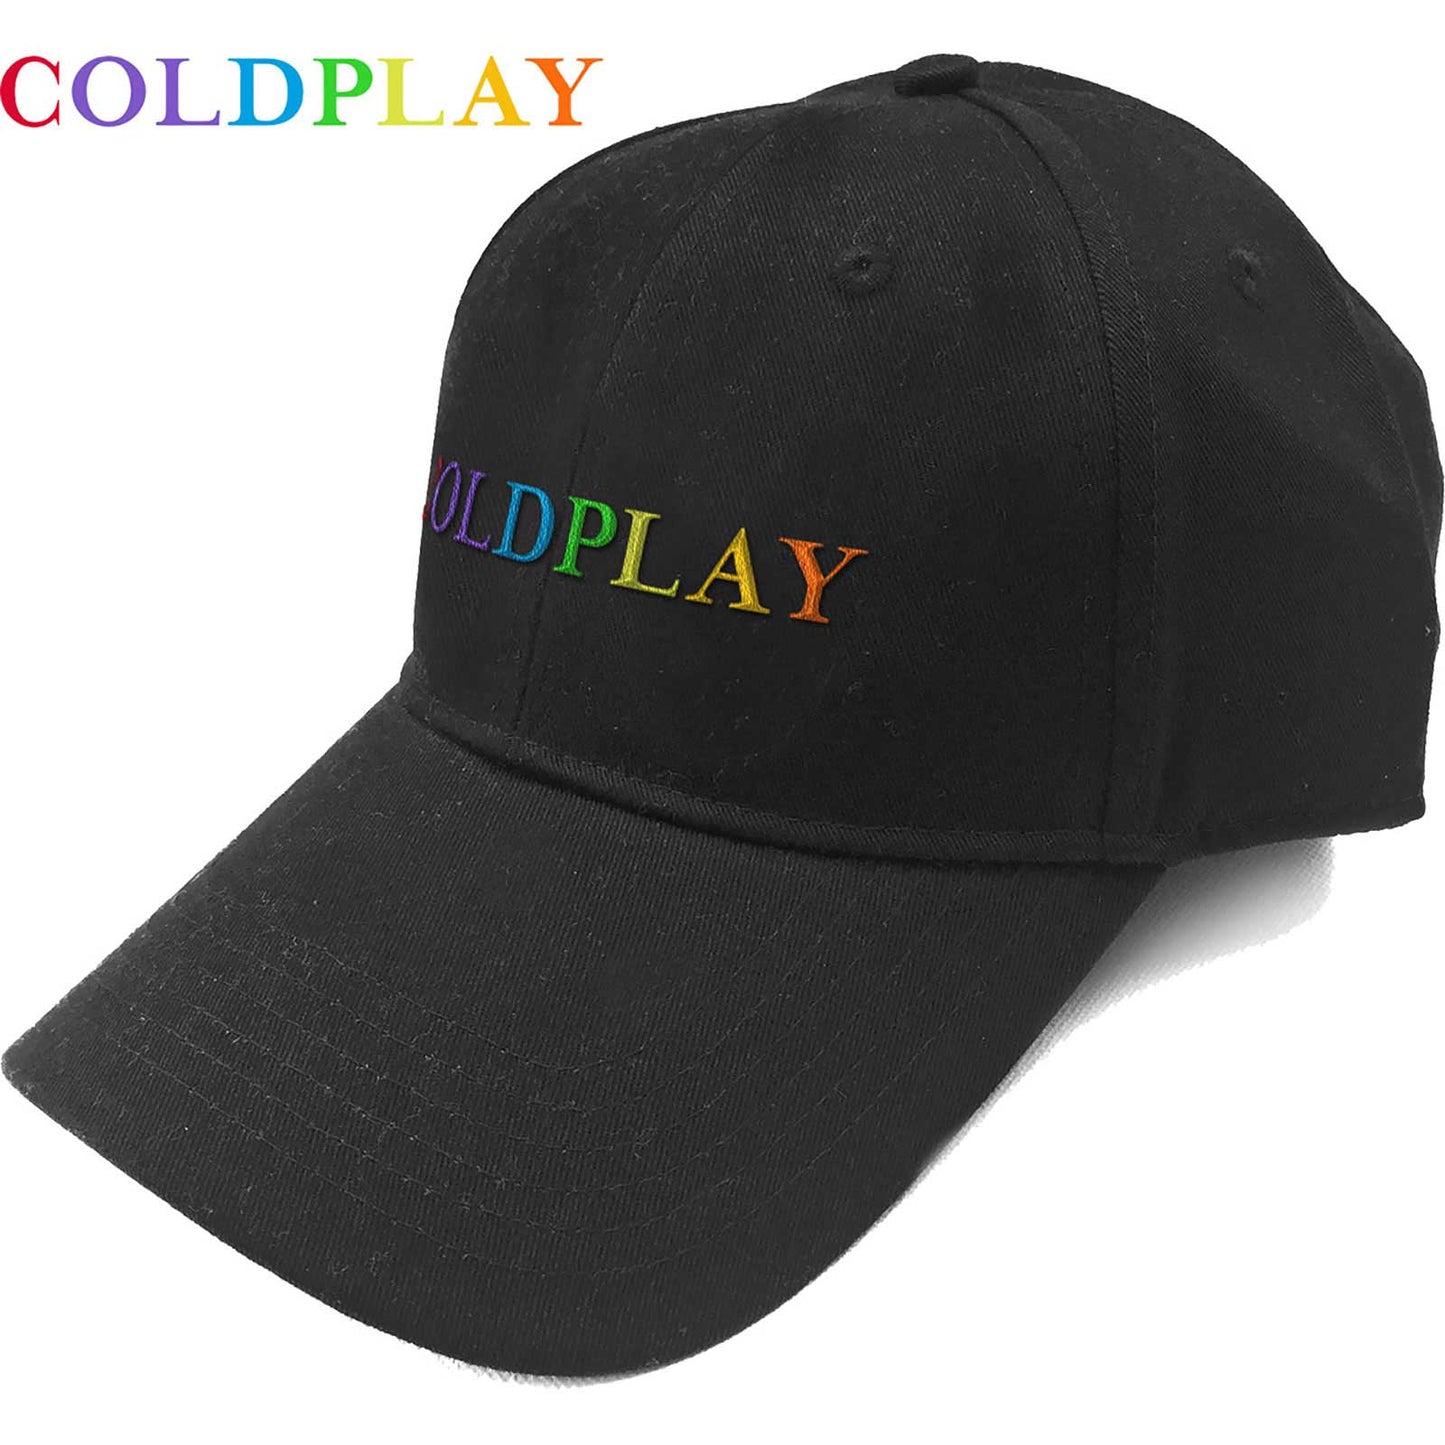 Coldplay Baseball Cap: Rainbow Logo